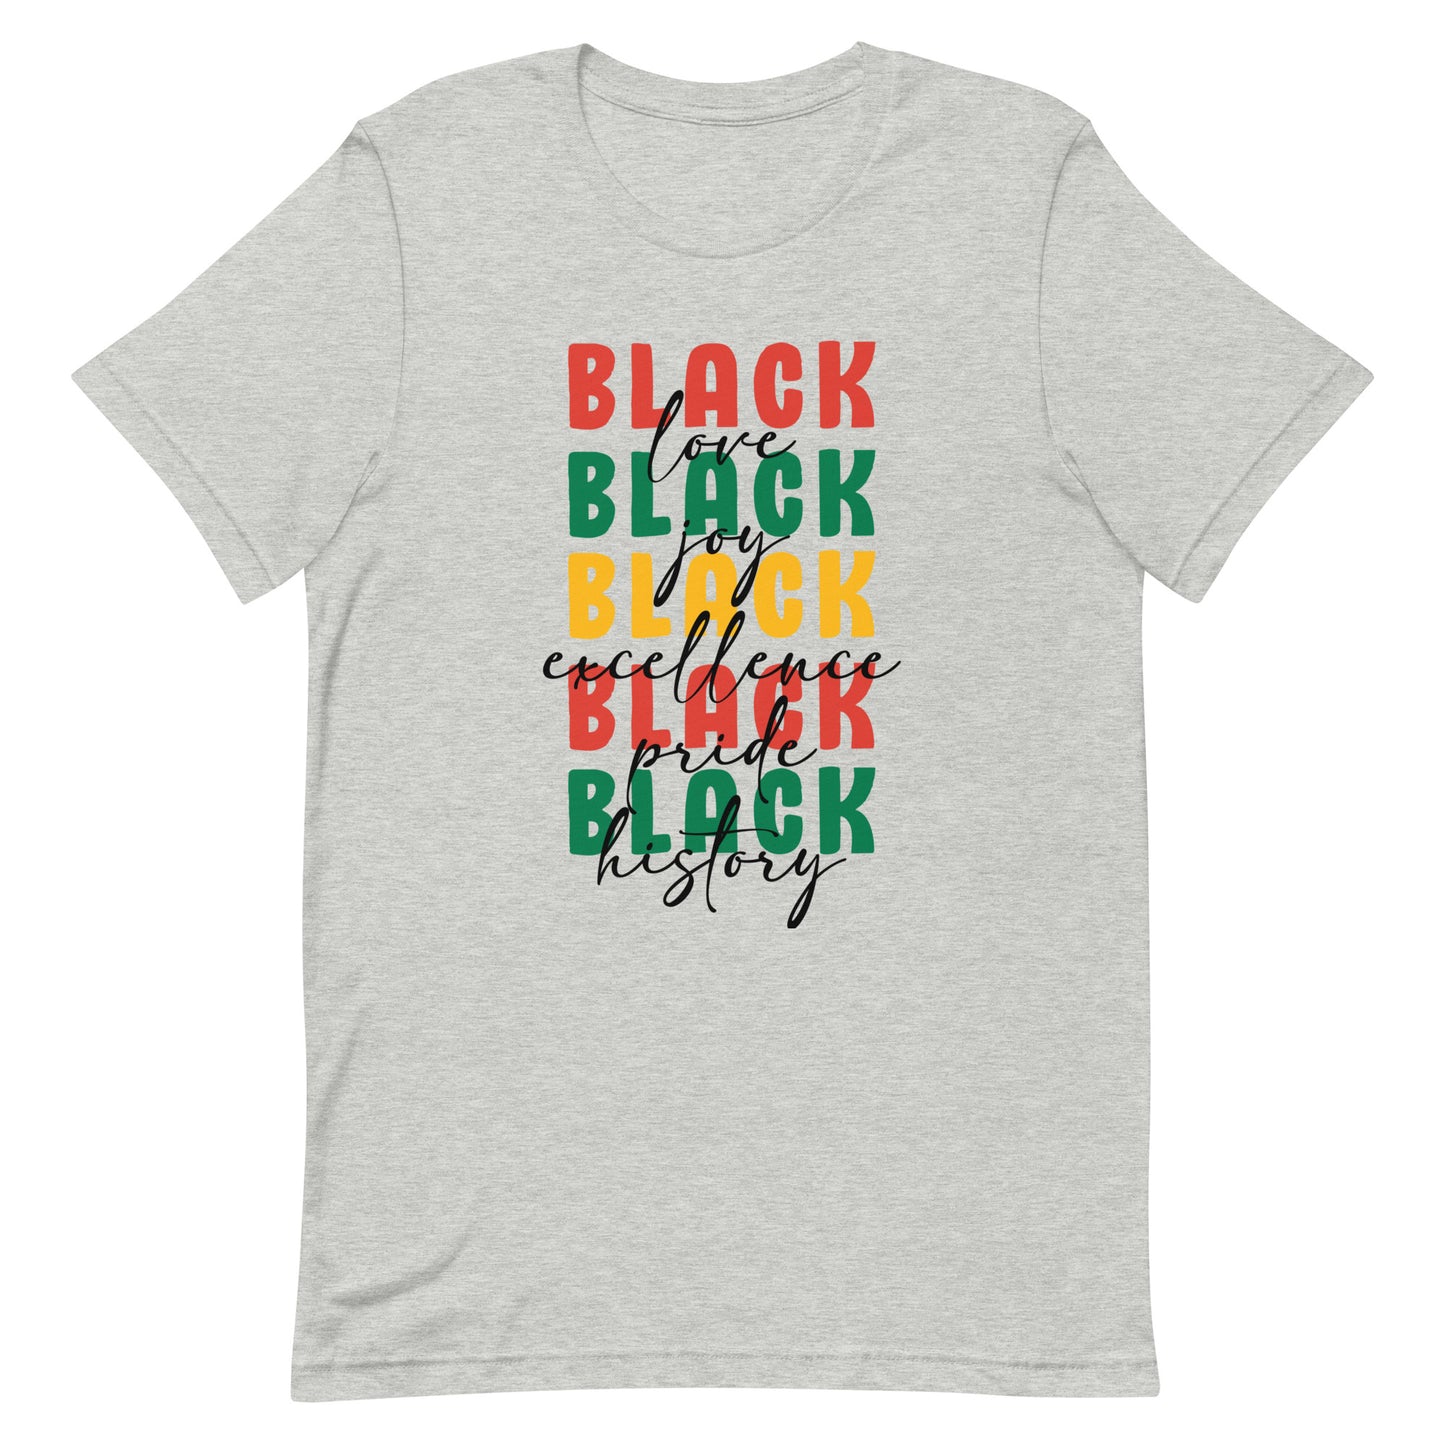 Black Love Black Excellence Black History Unisex T-shirt